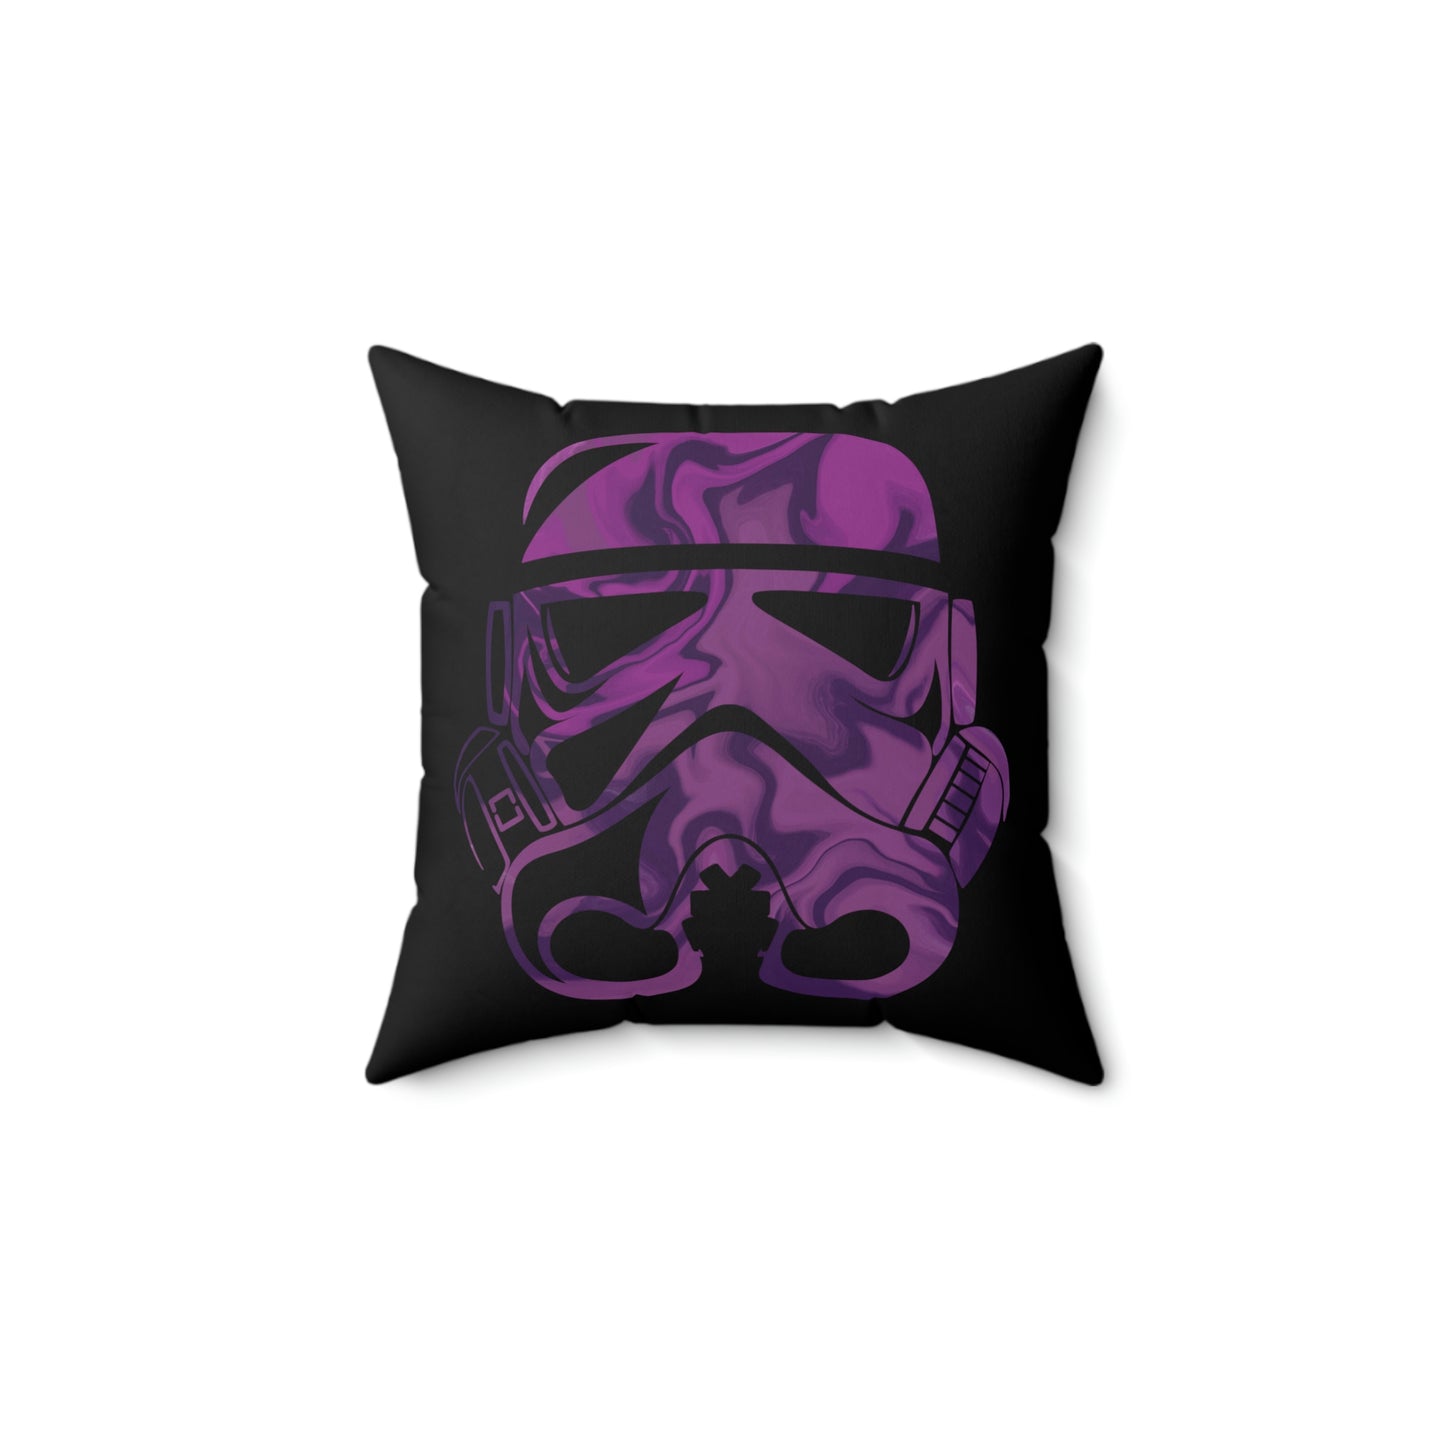 Spun Polyester Square Pillow Case ”Storm Trooper 4 on Black”